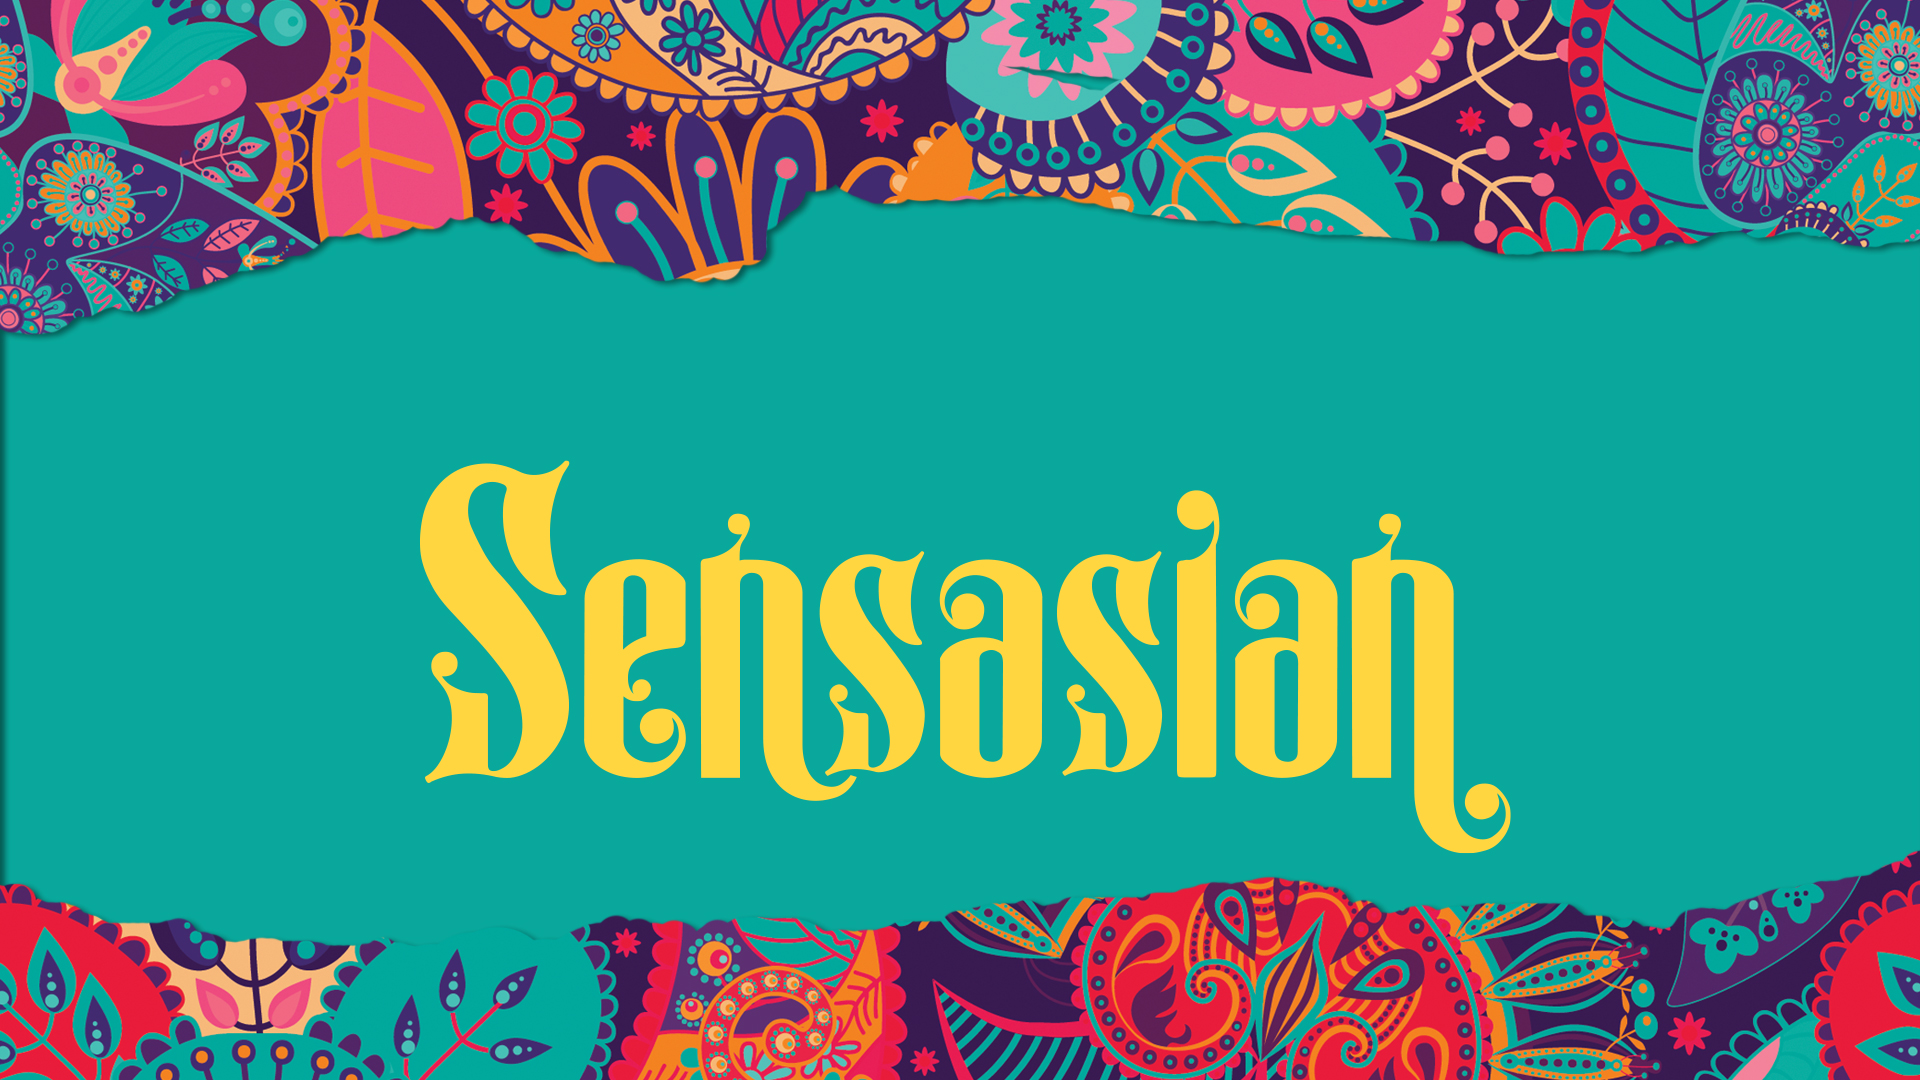 Sensasian logo